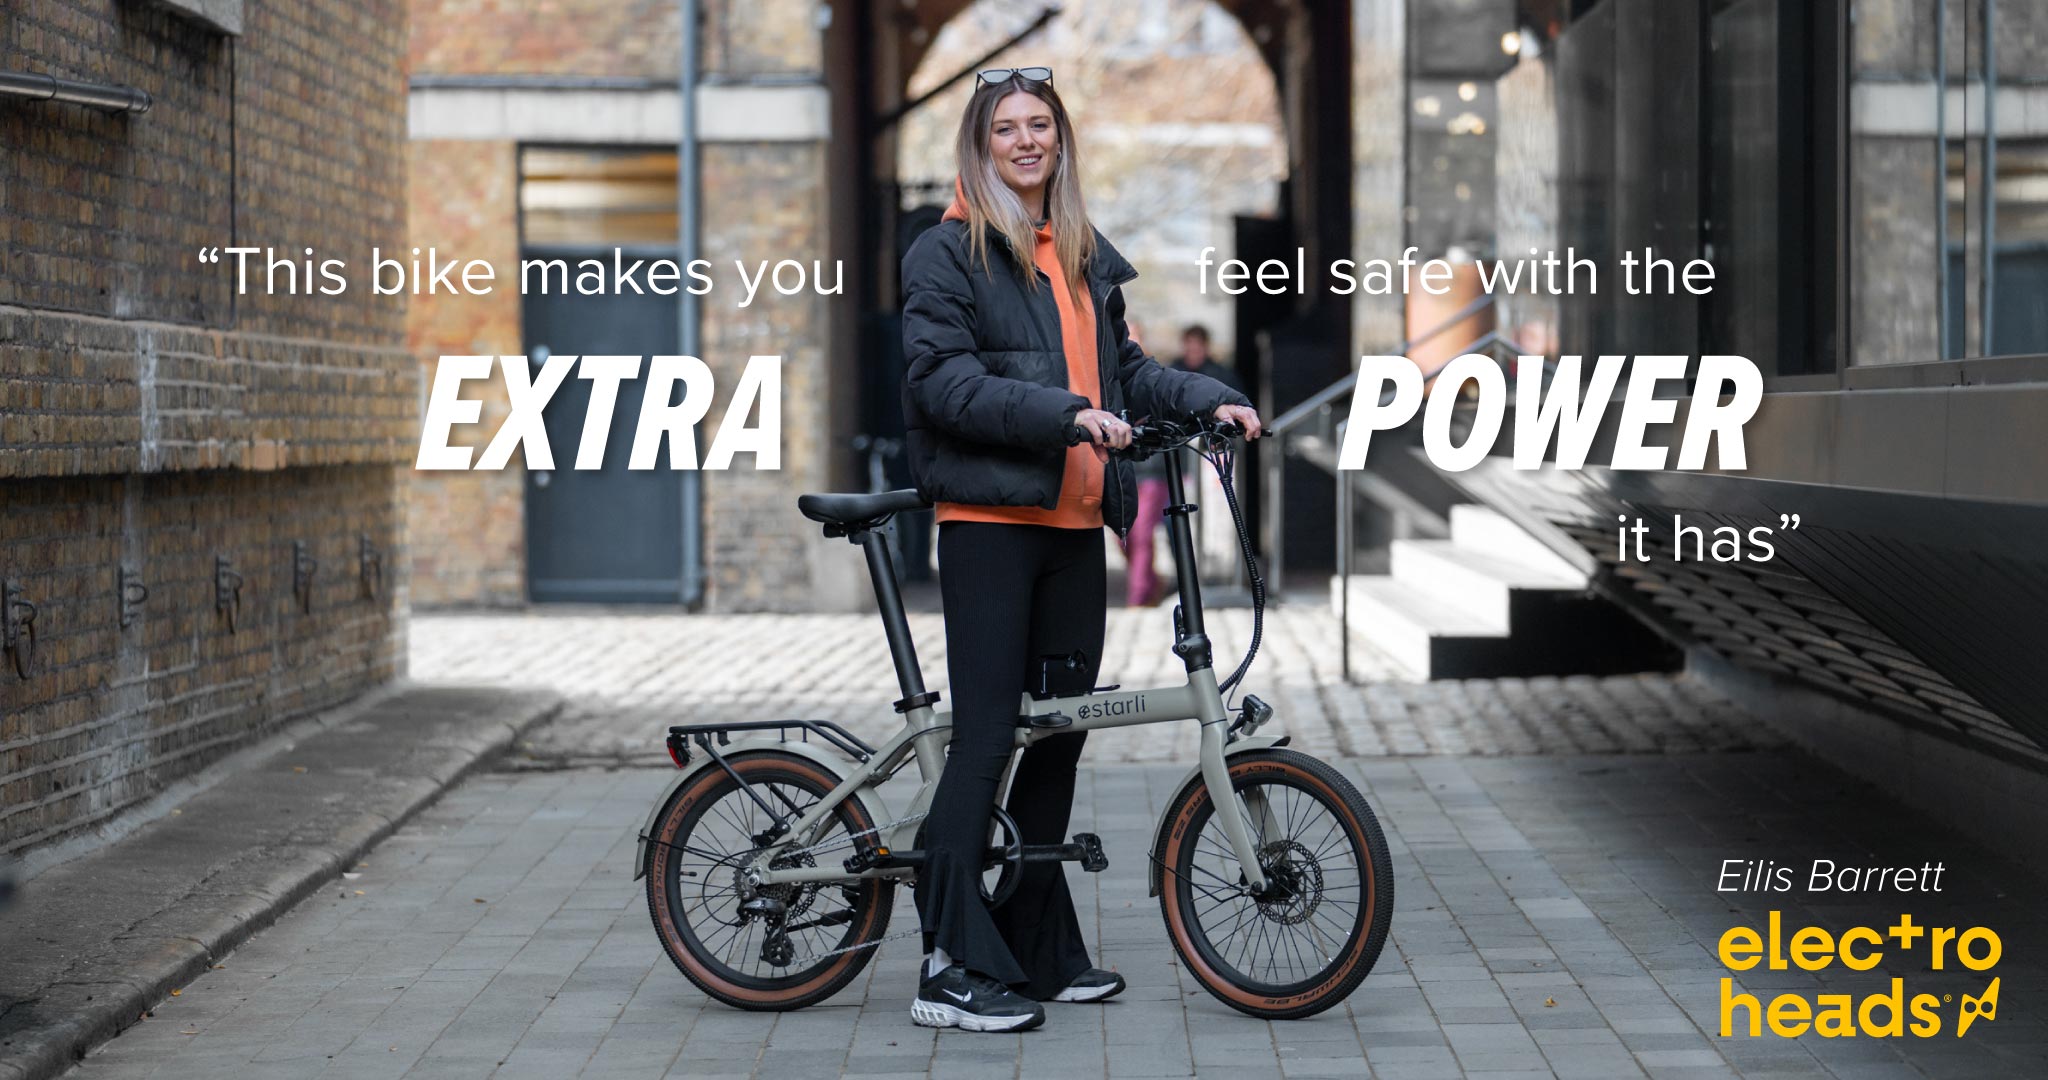 "The extra power of the Estarli e20.8 folding e-bike makes you feel safe". Eilis Barrett reviewing the five-star folding e-bike made in Britain